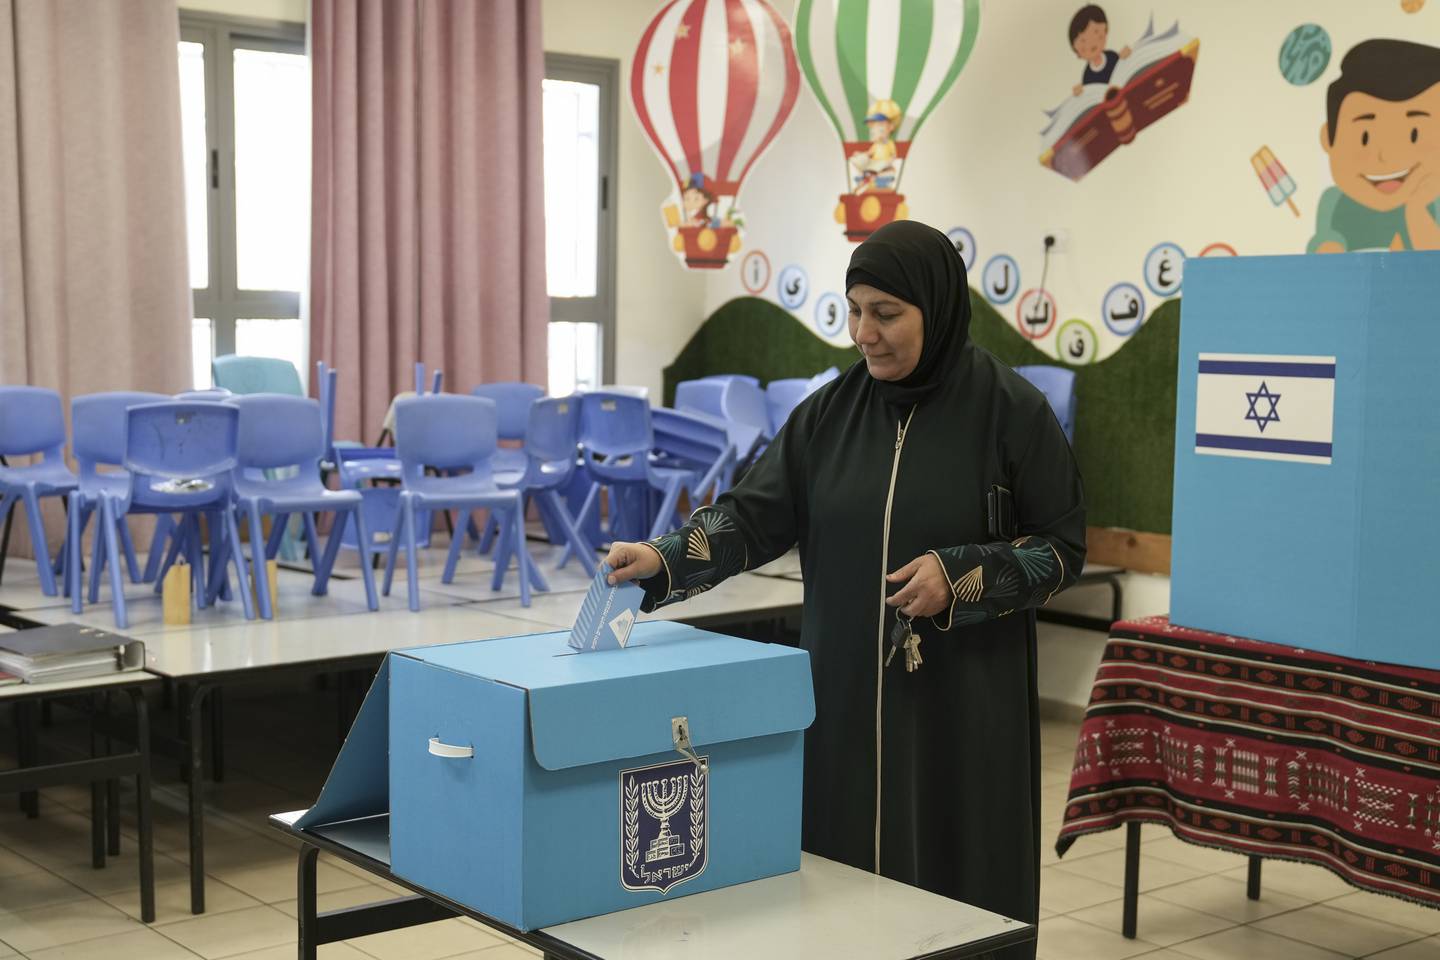 En palestiner med israelsk statsborgerskap stemmer i valget.